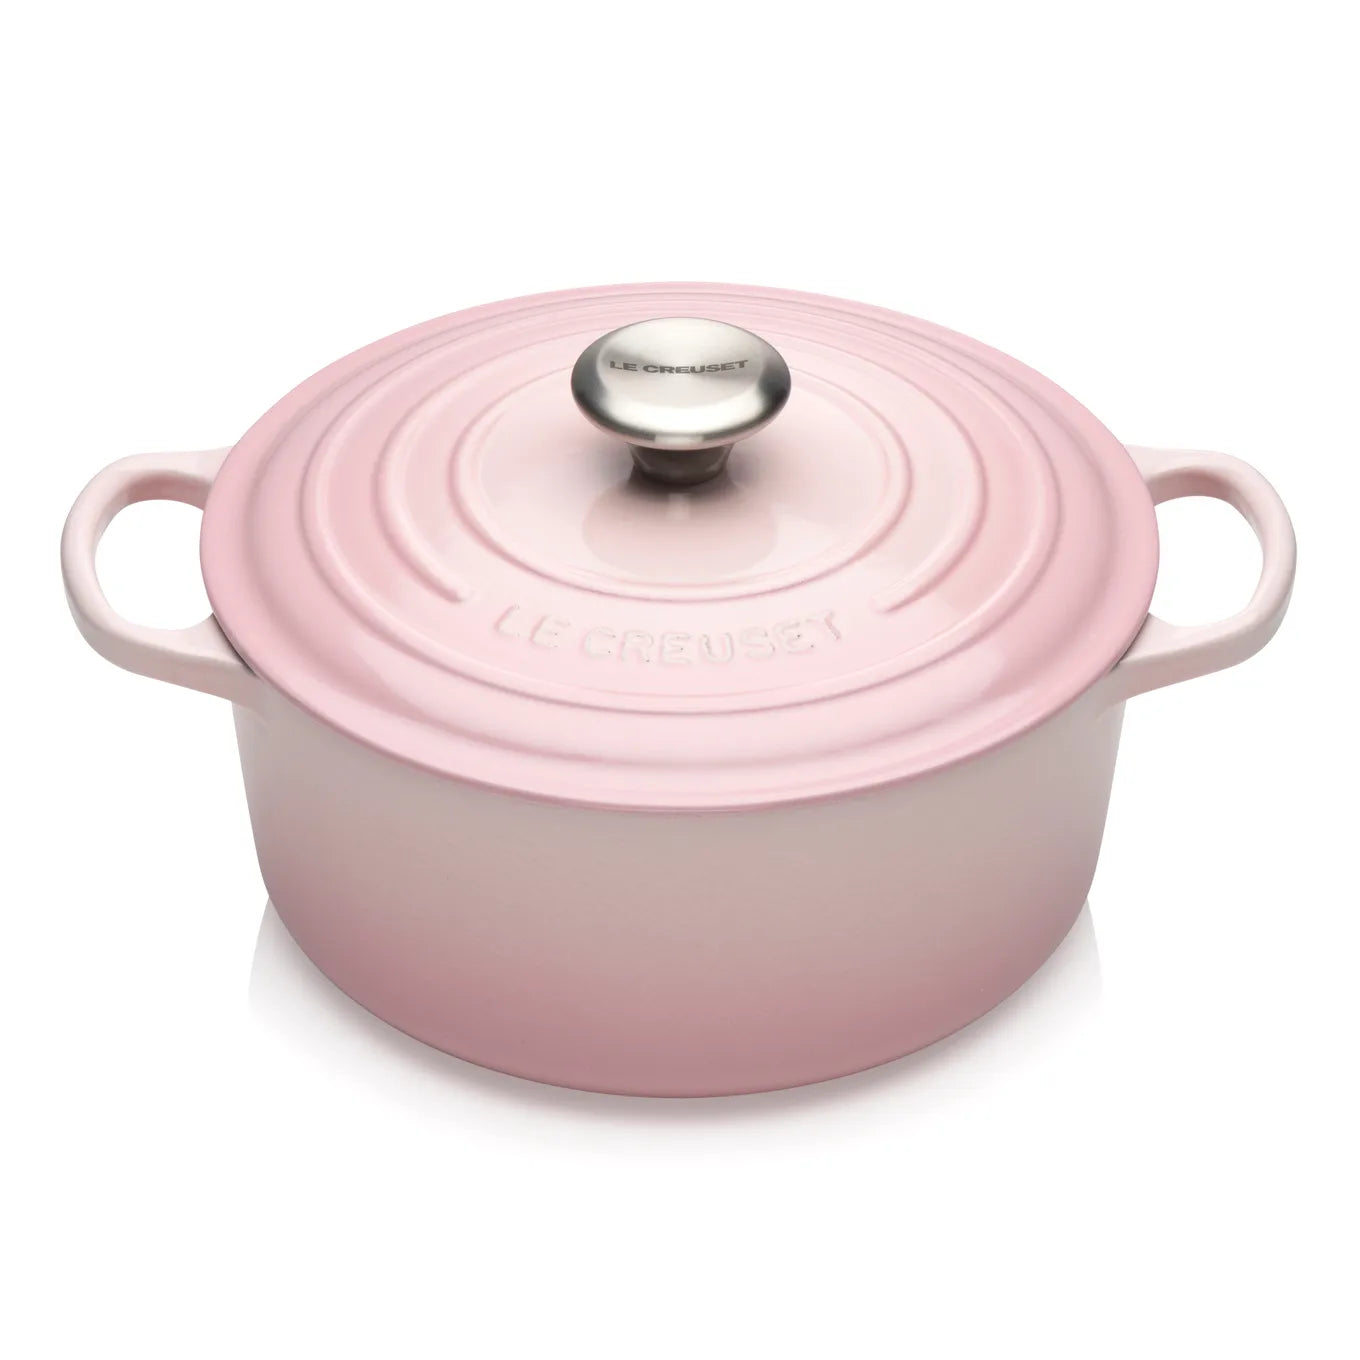 shell pink le creuset casserole cast iron dish 